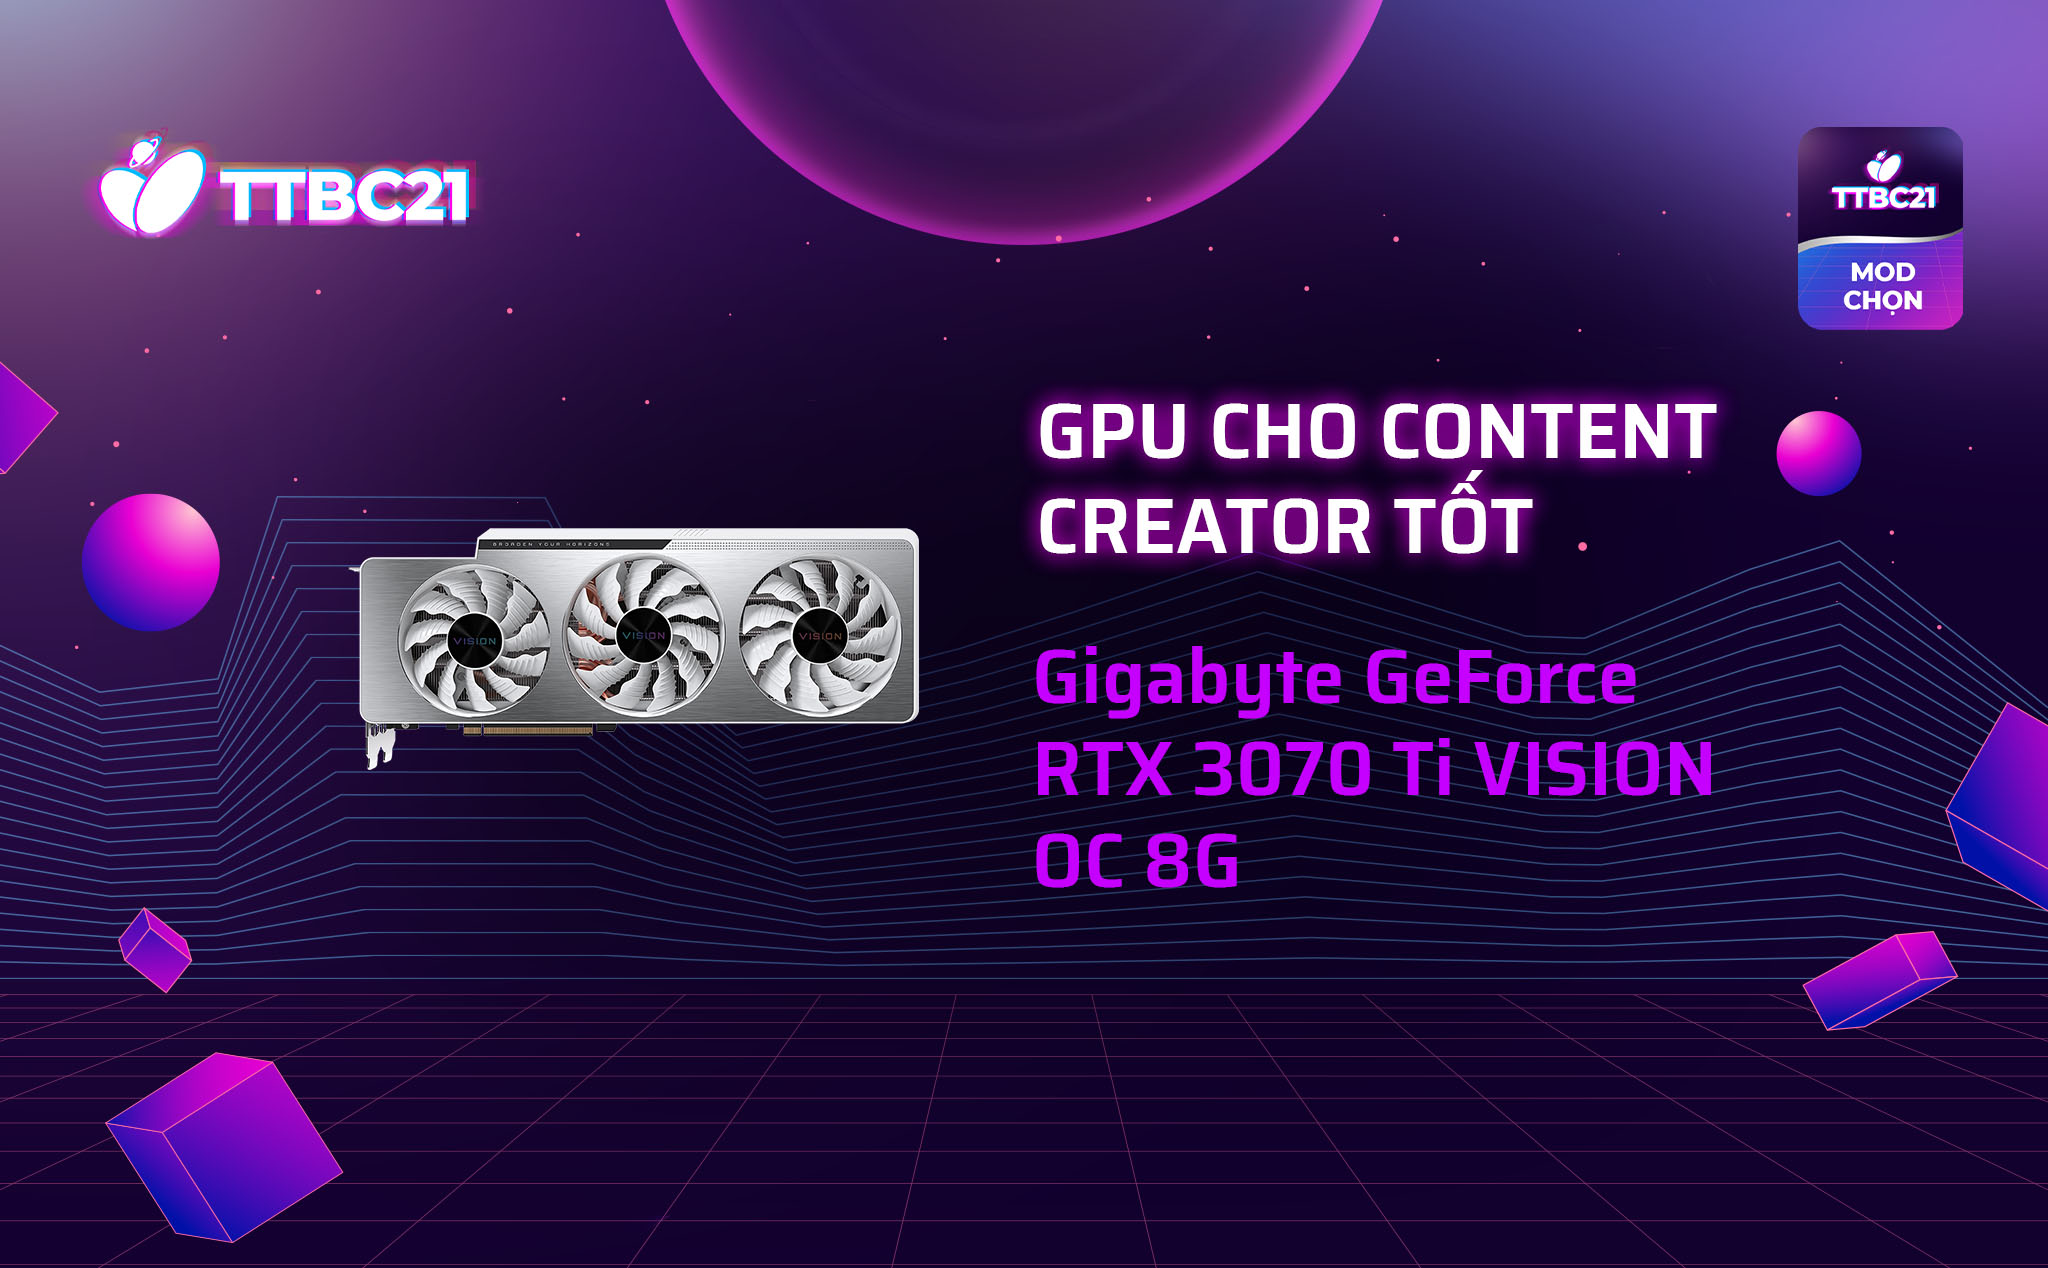 #TTBC21 – Mod Choice: Gigabyte GeForce RTX 3070 Ti VISION OC 8G, GPU cho content creator tốt nhất